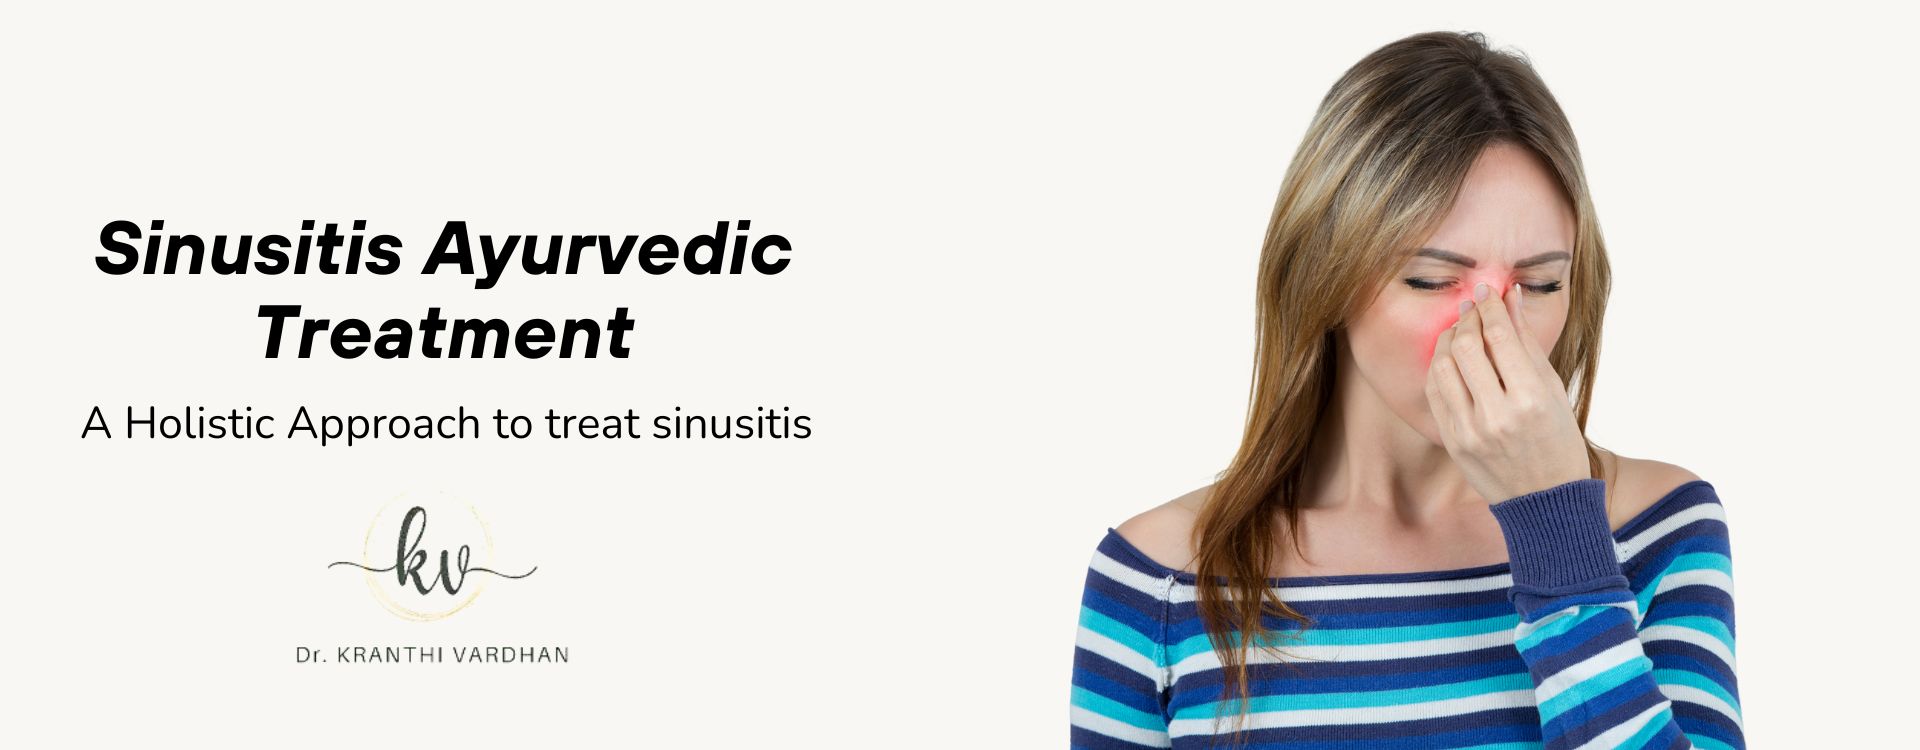 Sinusitis Ayurvedic Treatment: A Holistic Approach